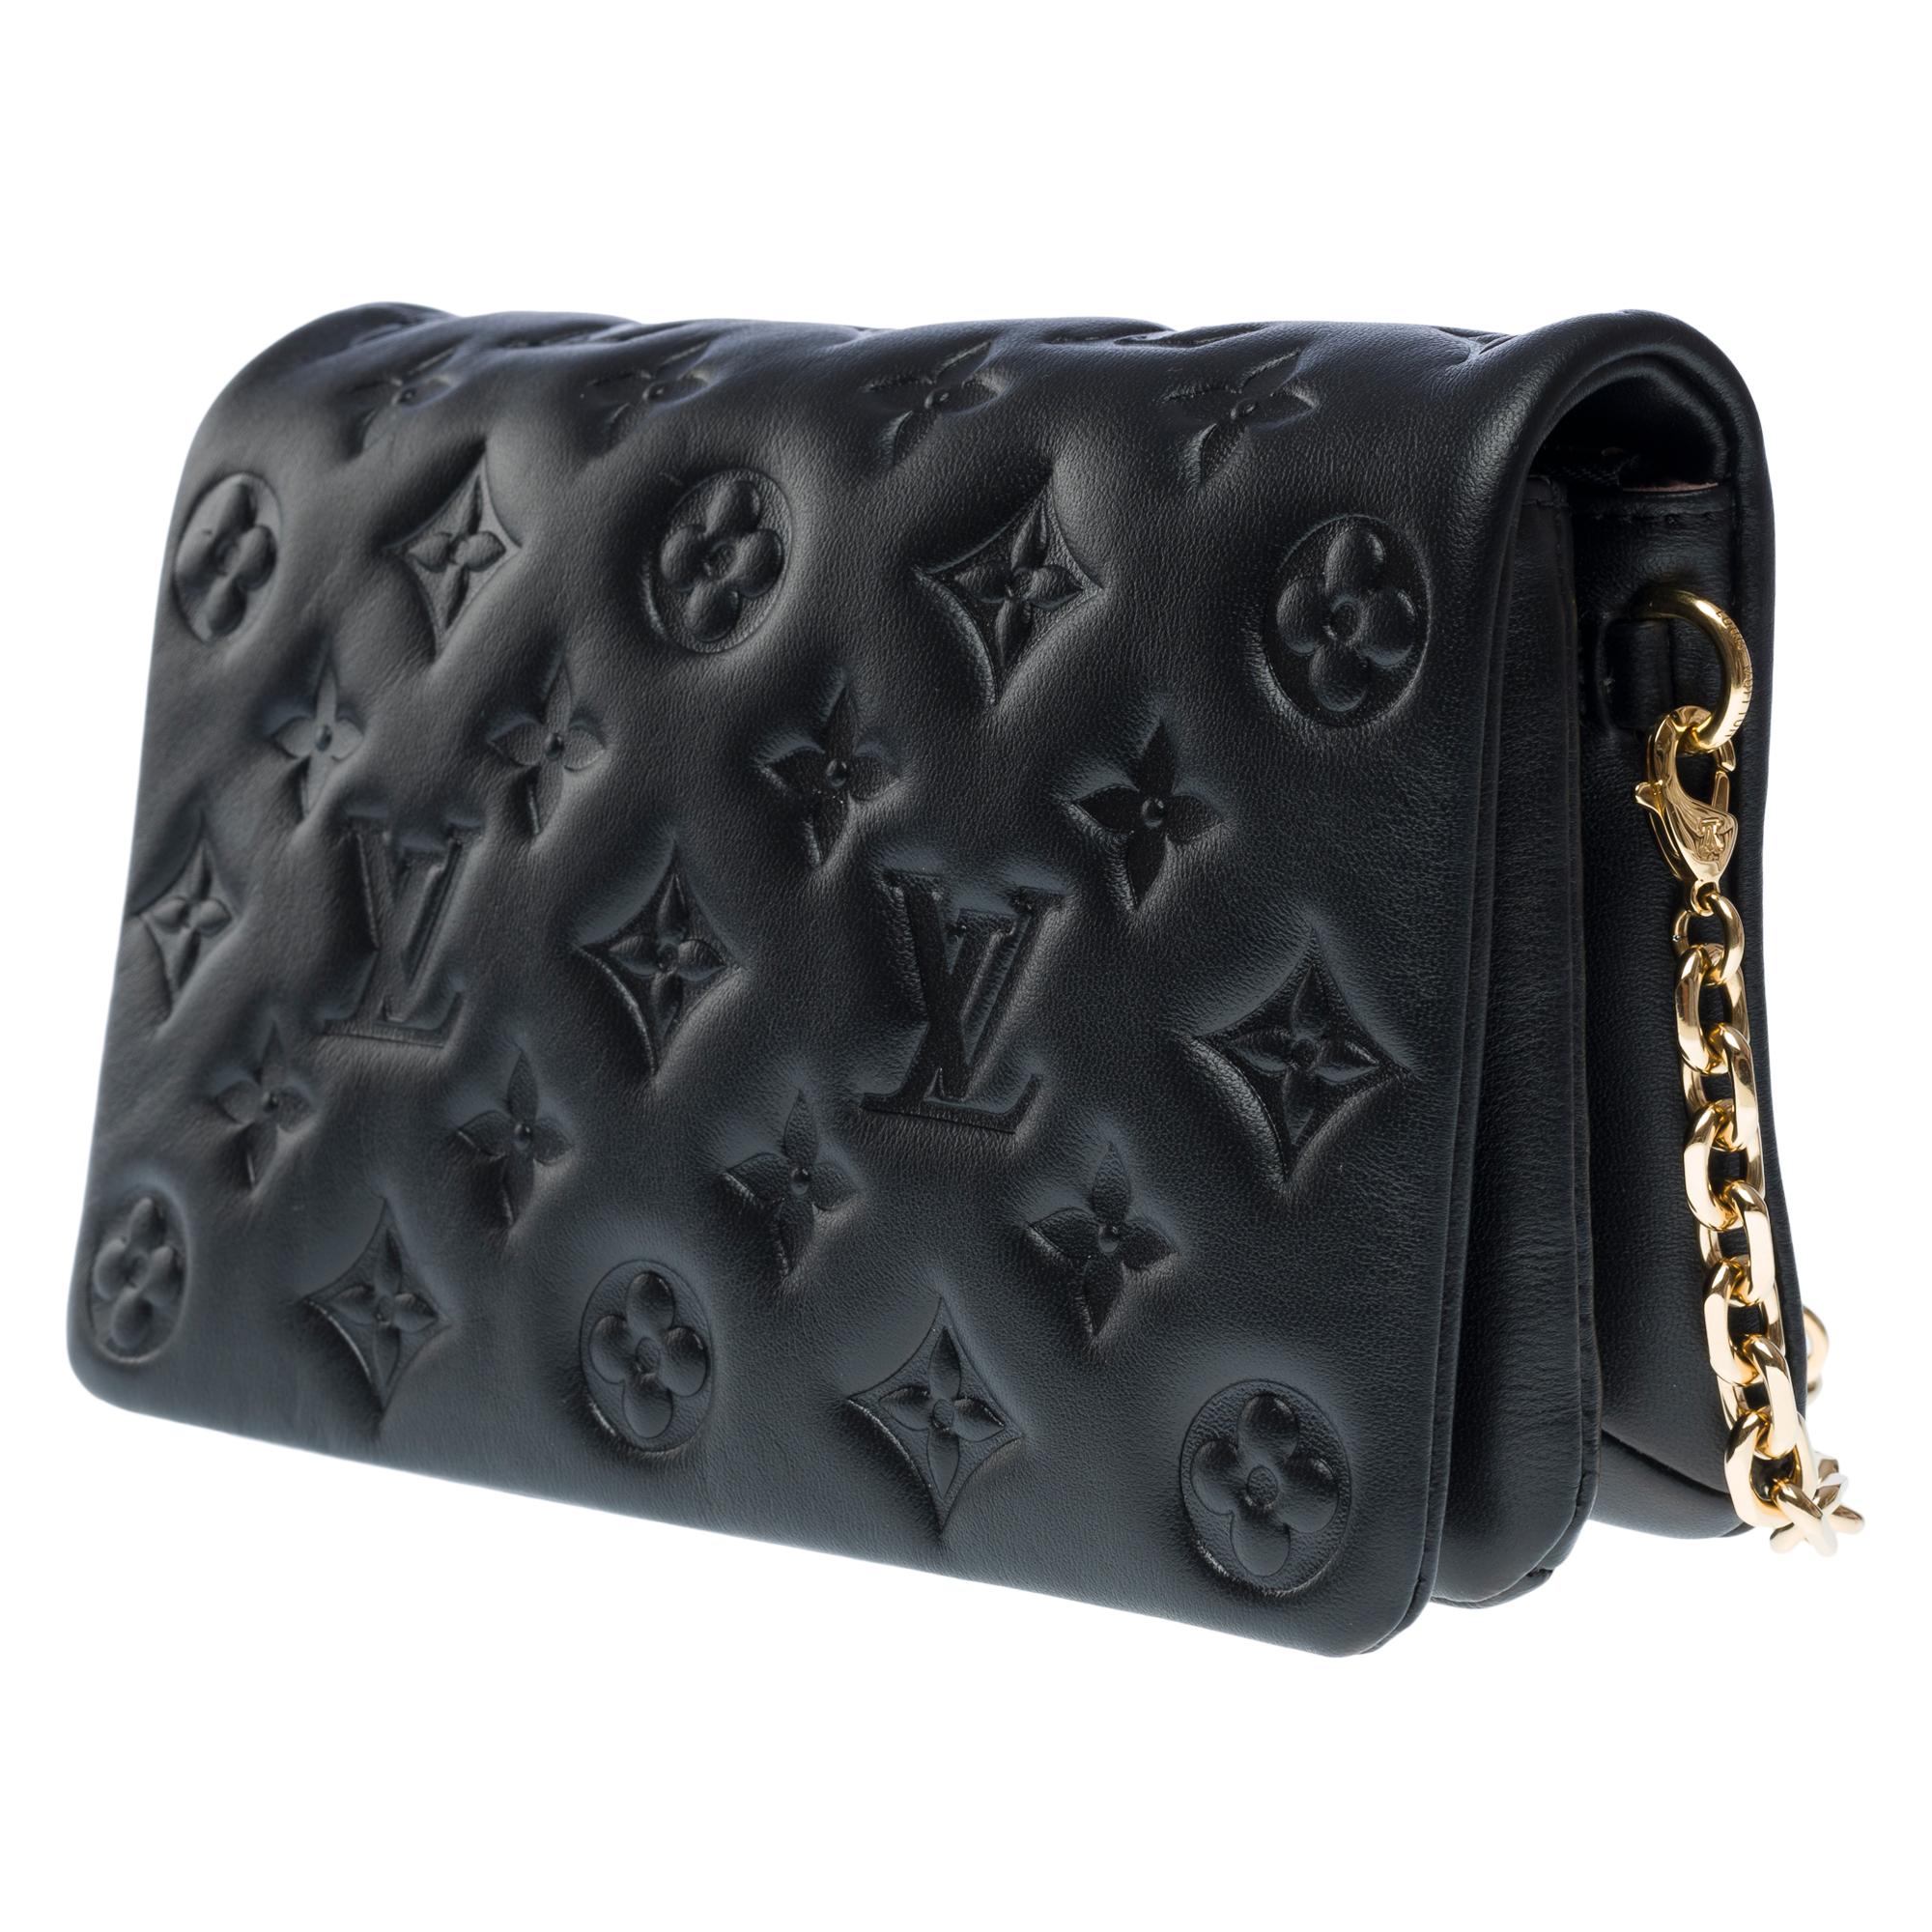 Louis Vuitton Cushion shoulder bag in black embossed monogram lambskin, GHW 1